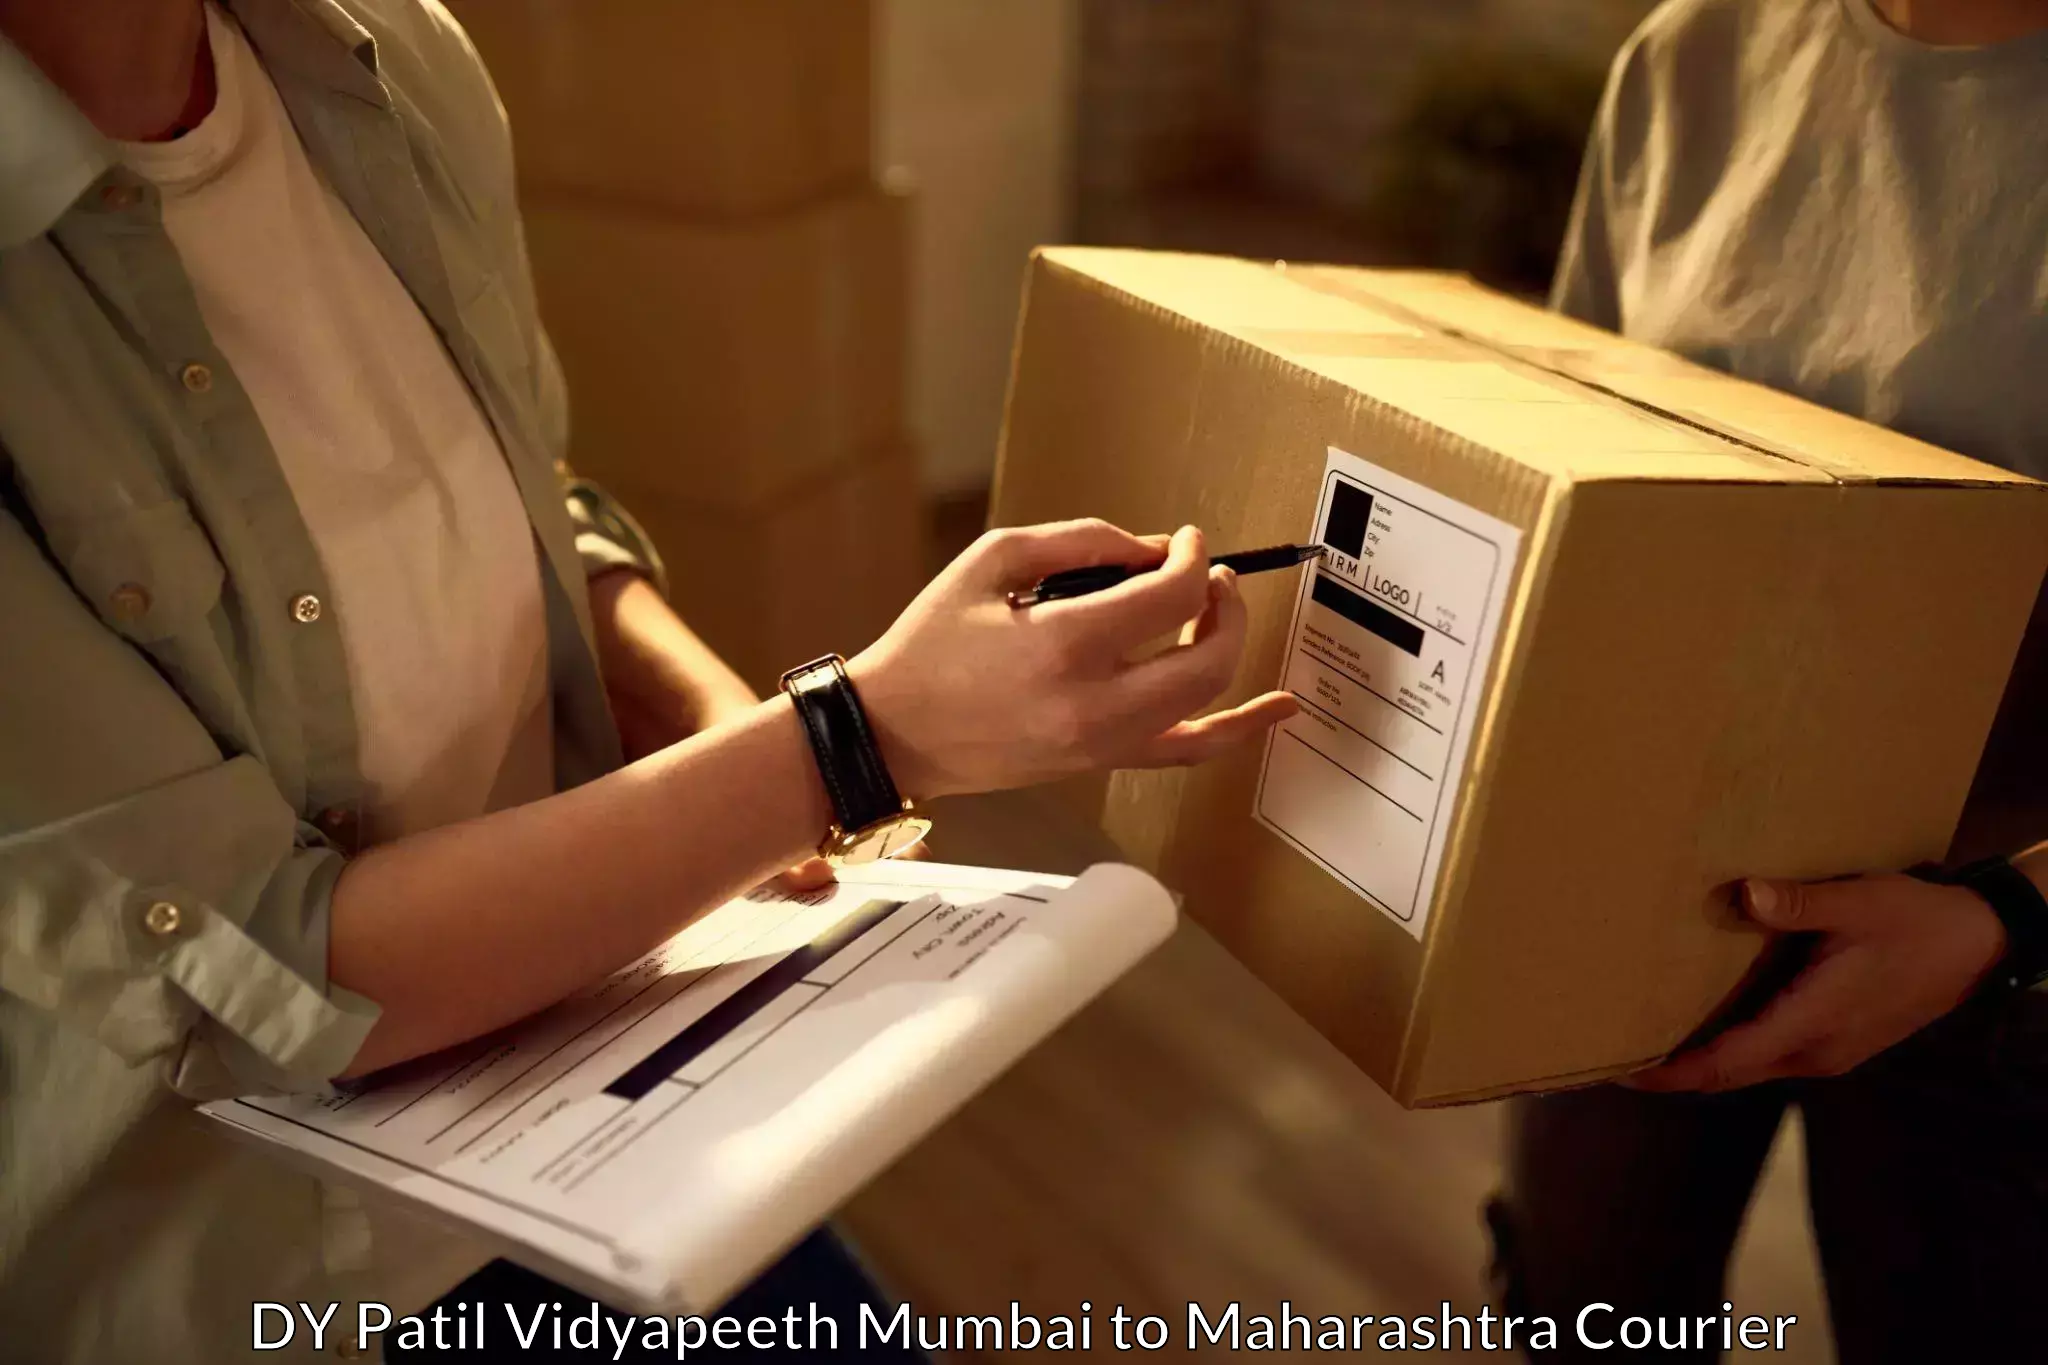 Bulk courier orders DY Patil Vidyapeeth Mumbai to Latur